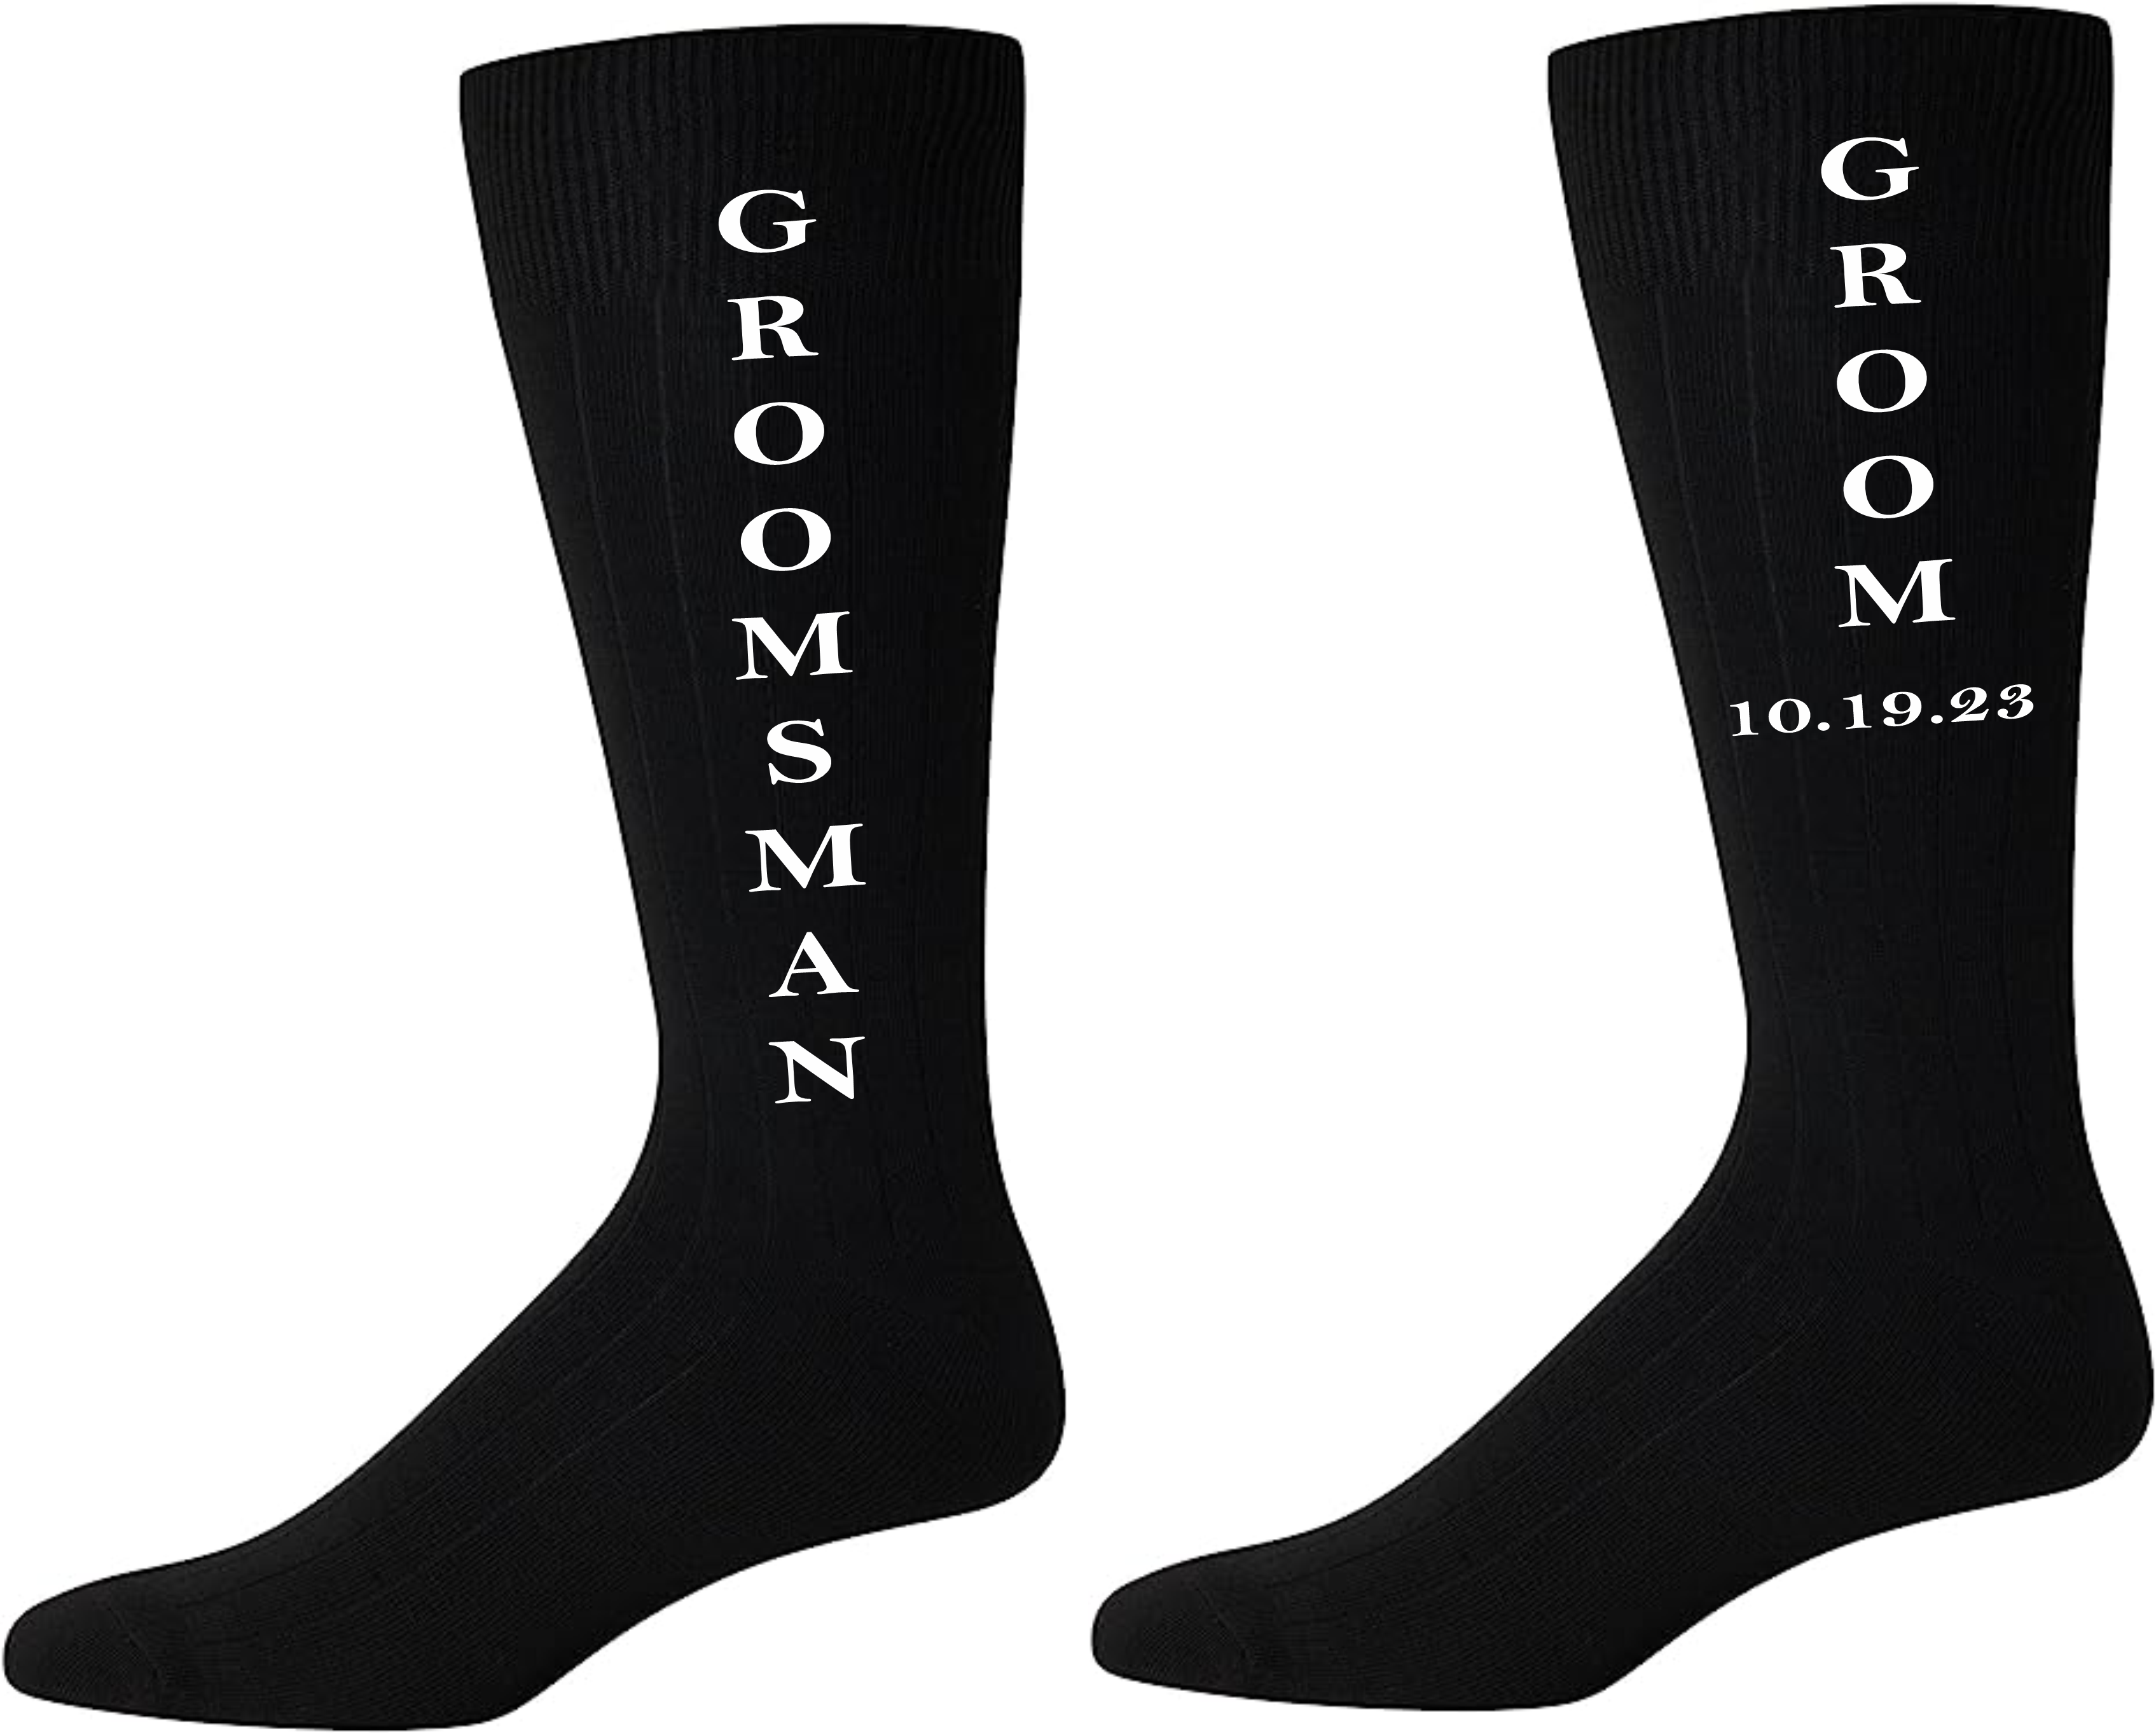 Men's Socks - Groomsman / Best Man / Father of the Groom